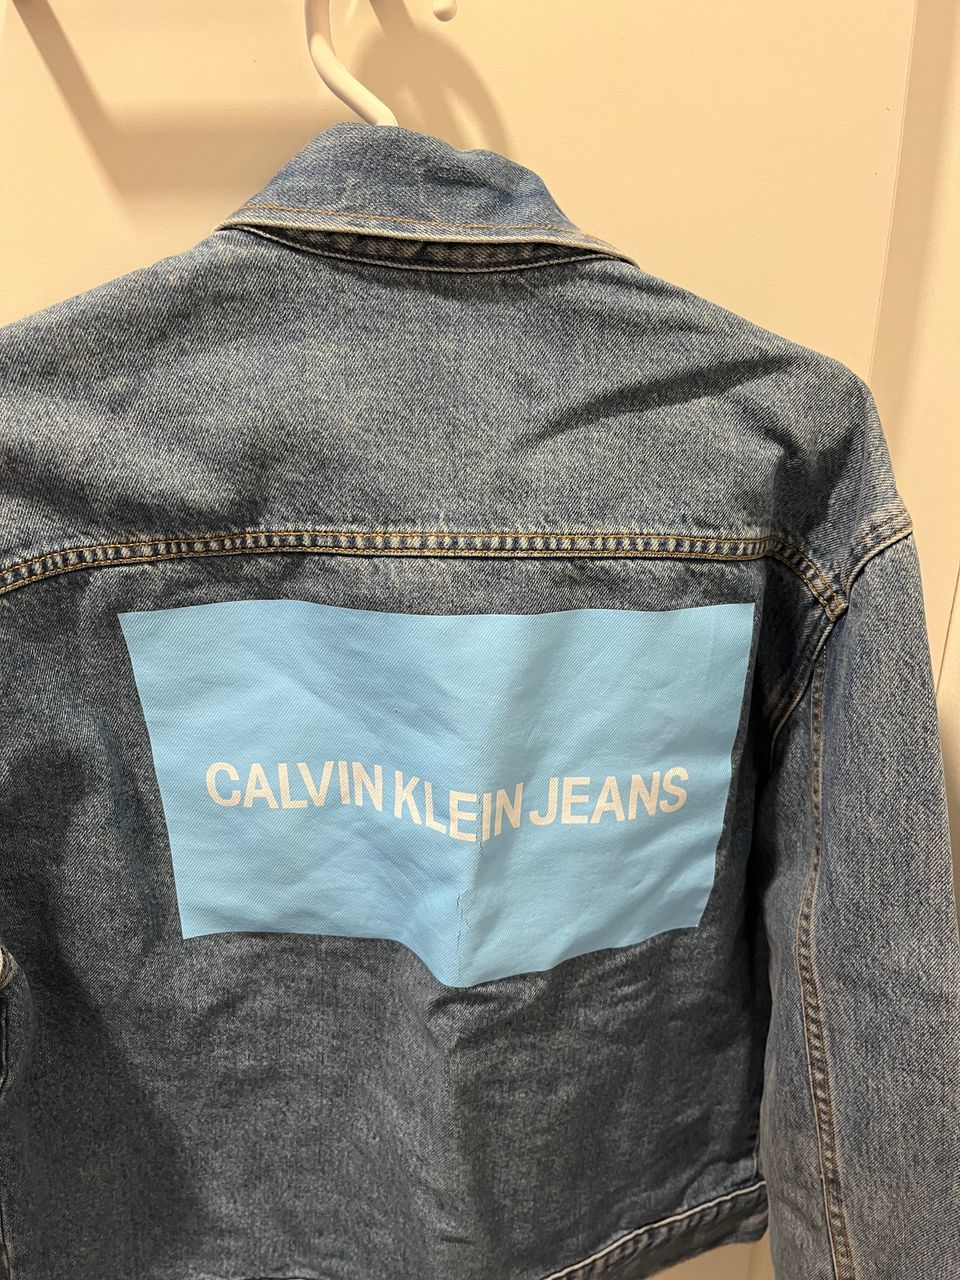 Calvin klein jeans takki